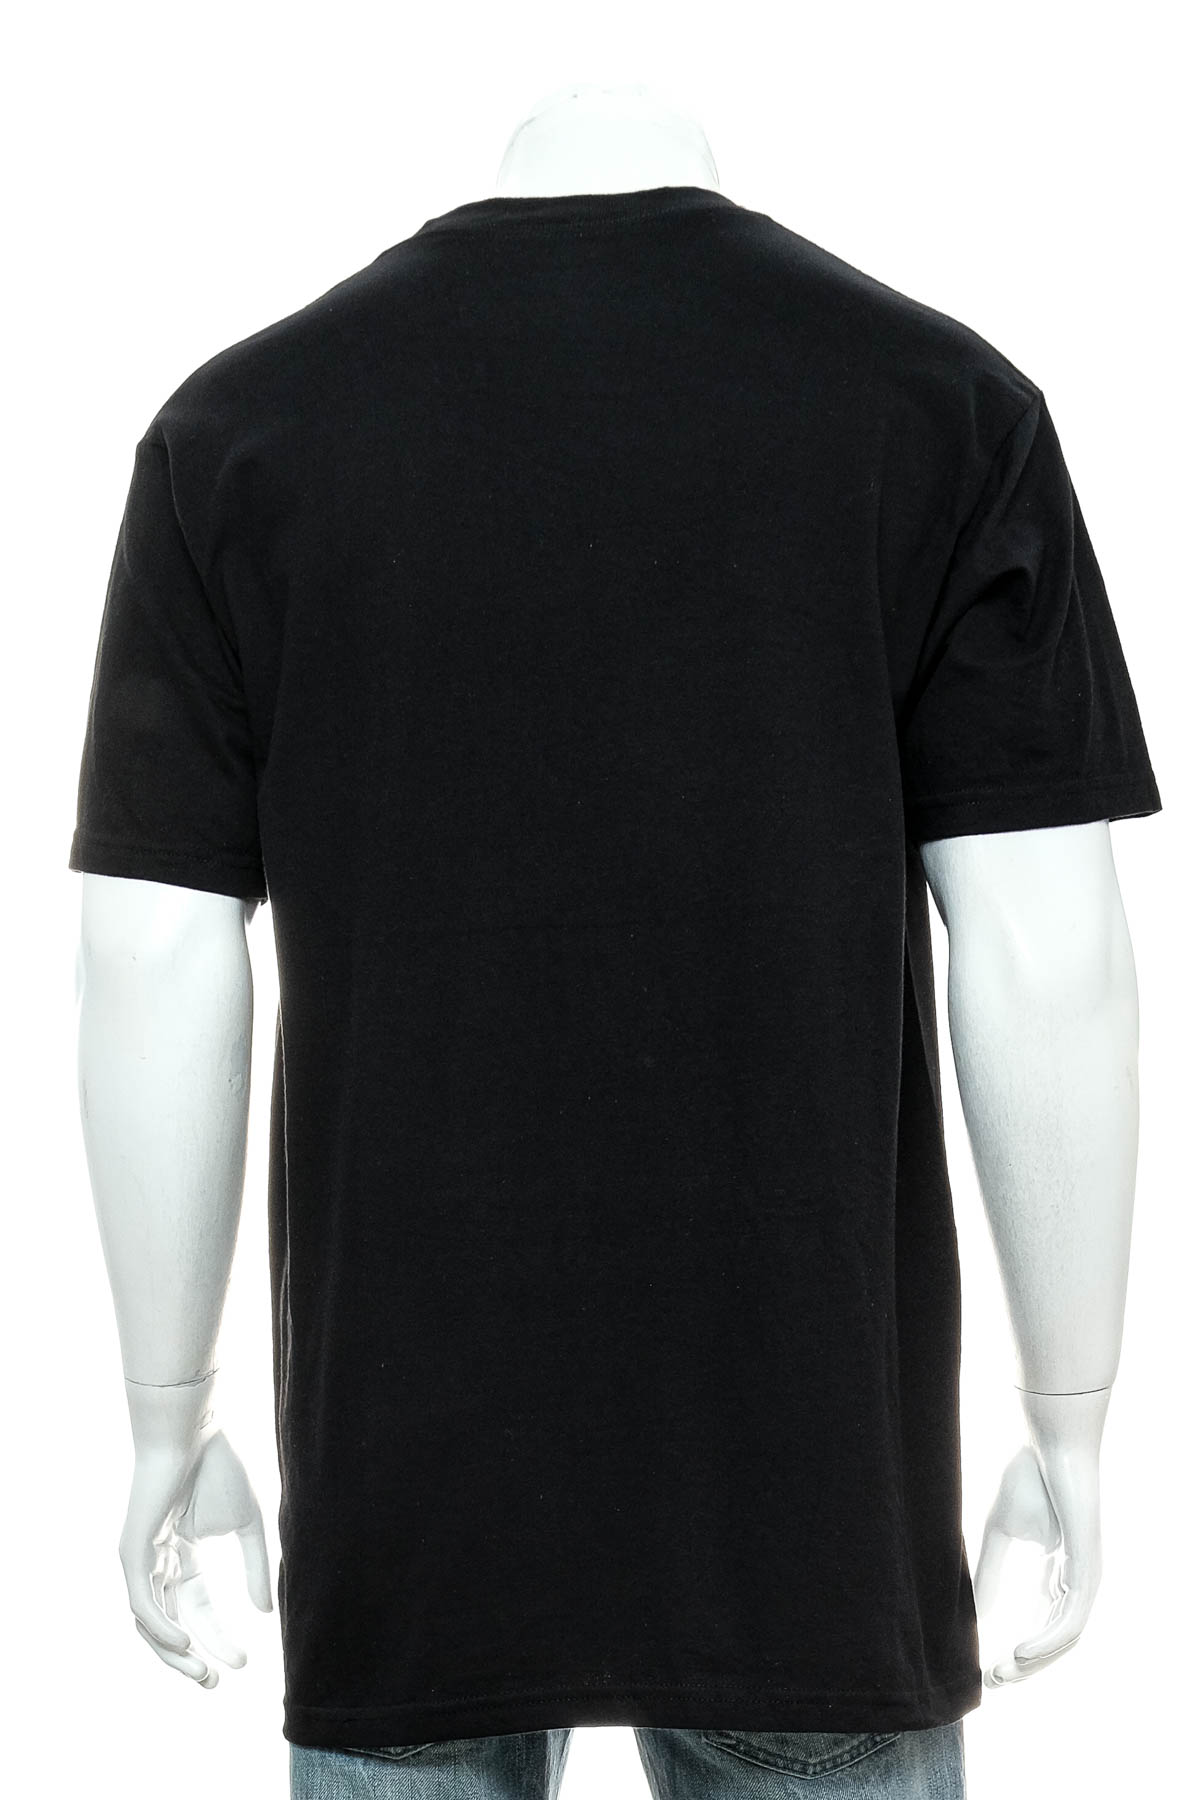 Men's T-shirt - KIRKLAND Signature - 1